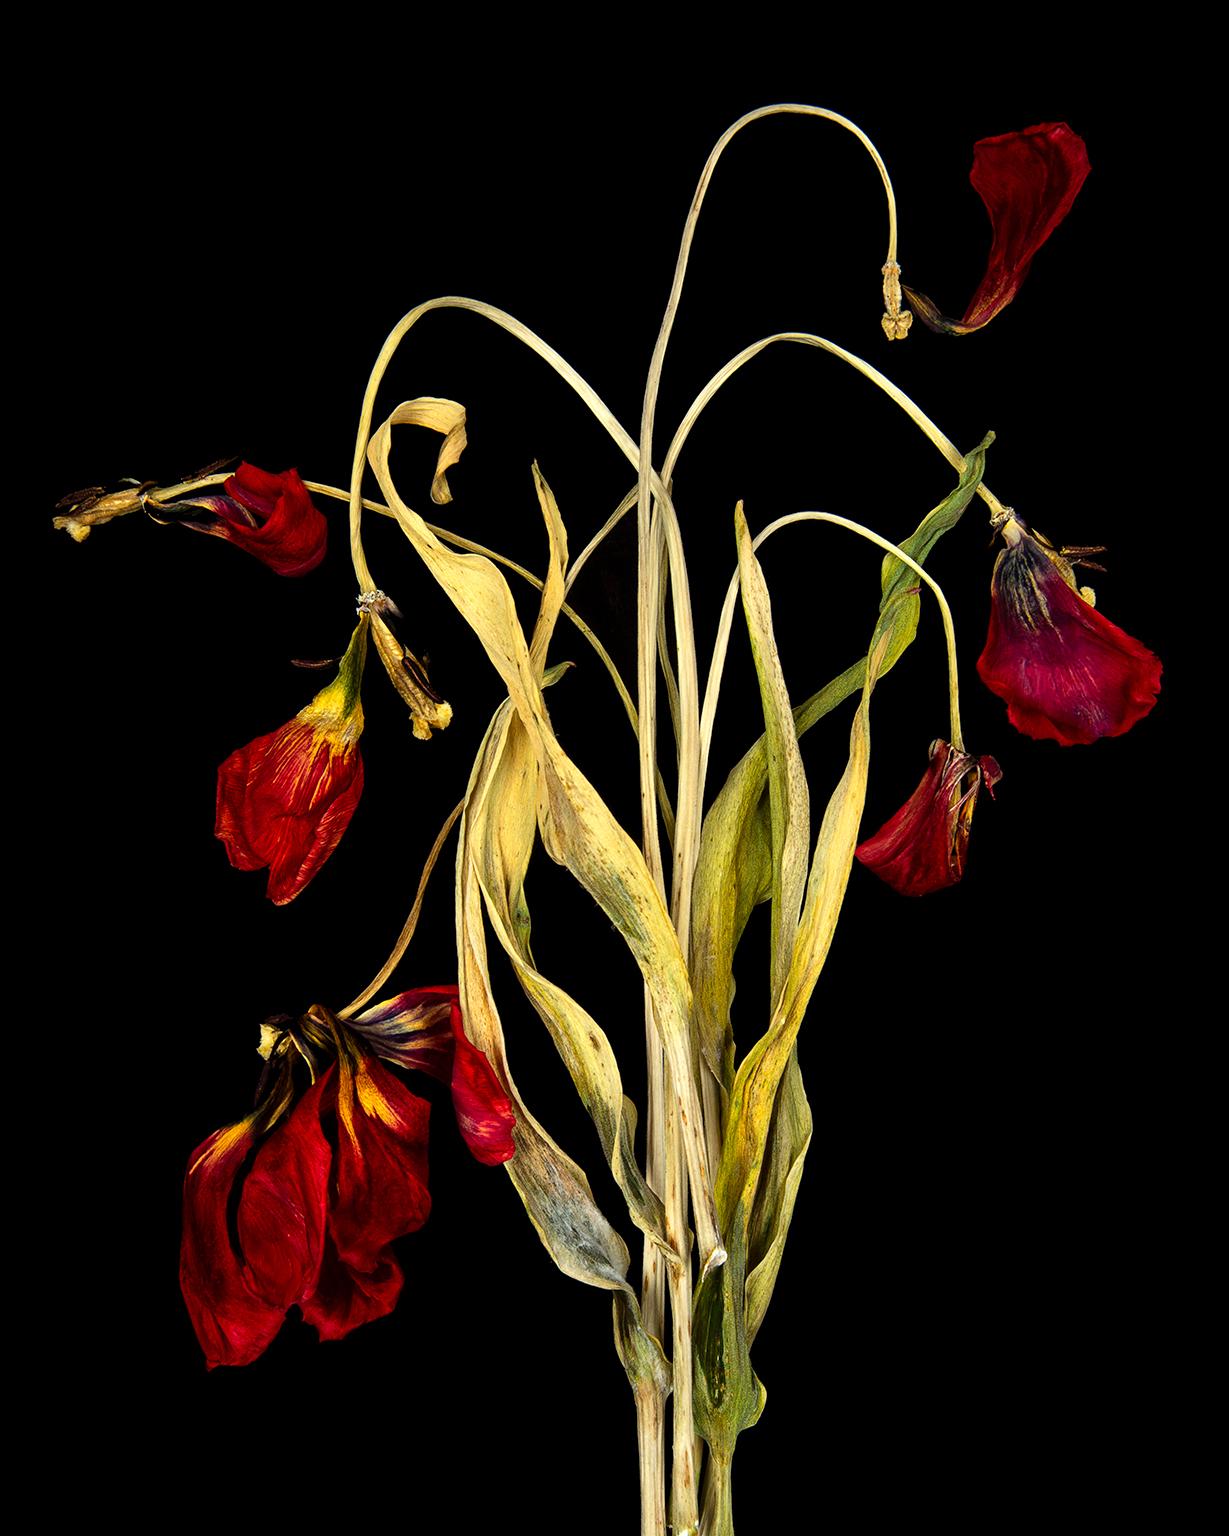 Tulip No. 3 - Photograph by Chris Thomaidis